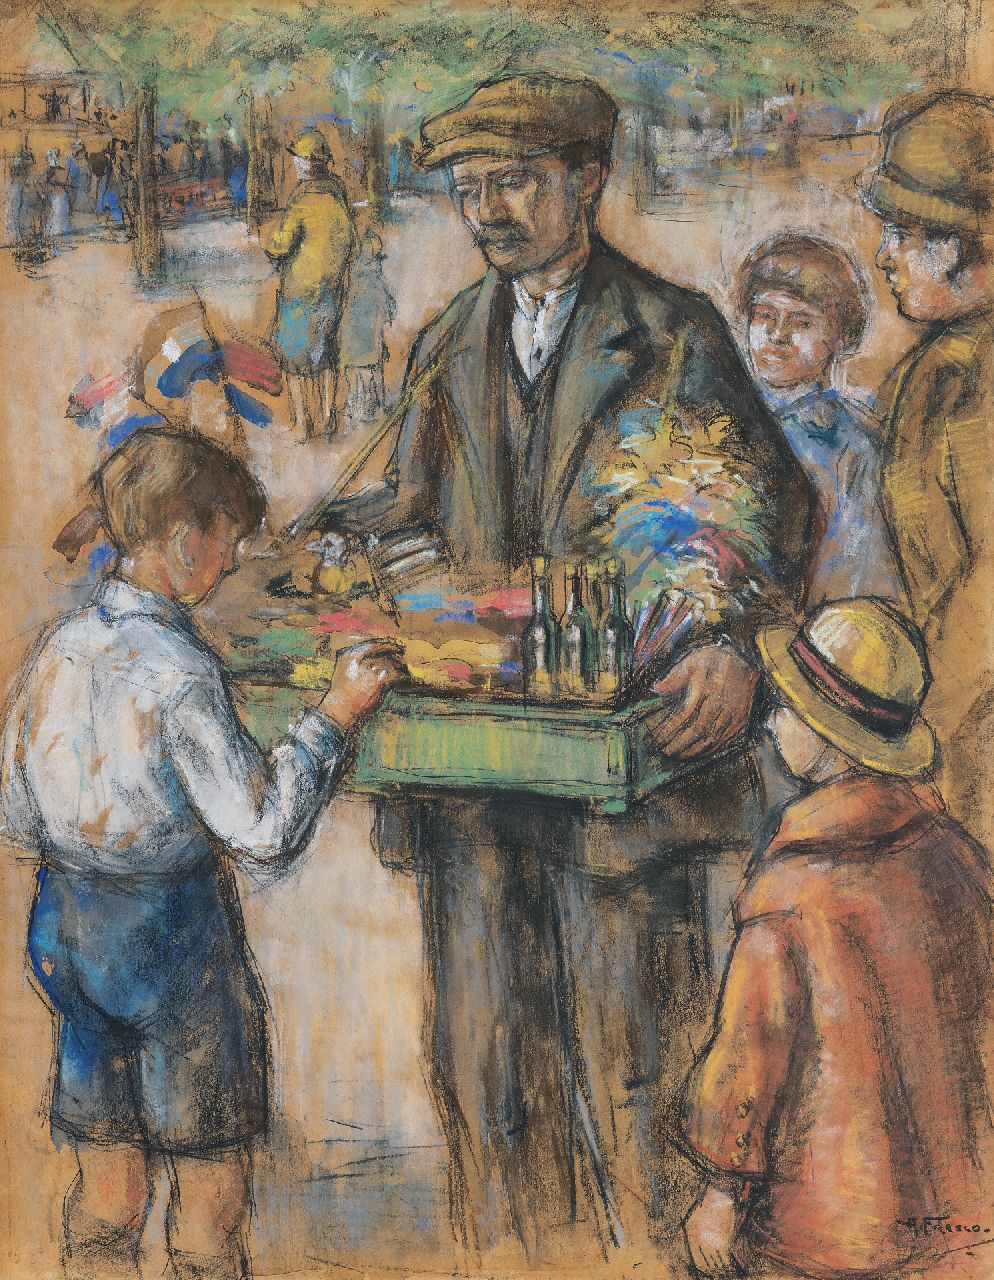 Fresco A.  | Abraham Fresco, Street vendor, pastel on paper 56.9 x 44.0 cm, signed l.r.